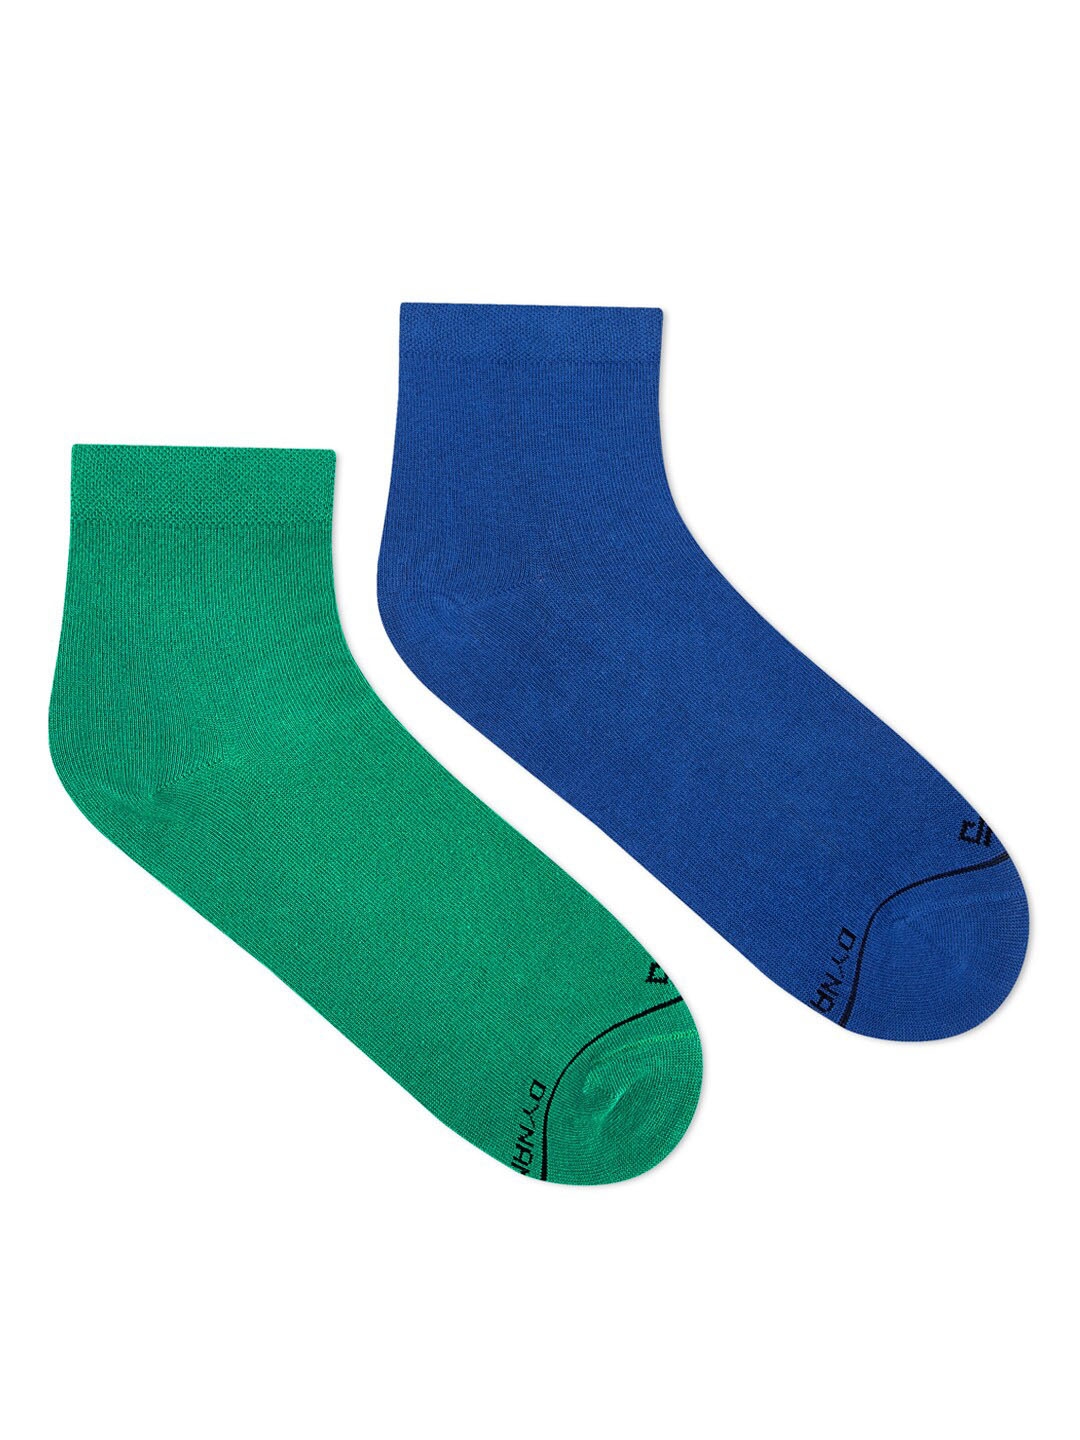 Dynamocks Men Pack of 2 Solid Ankle Length Socks